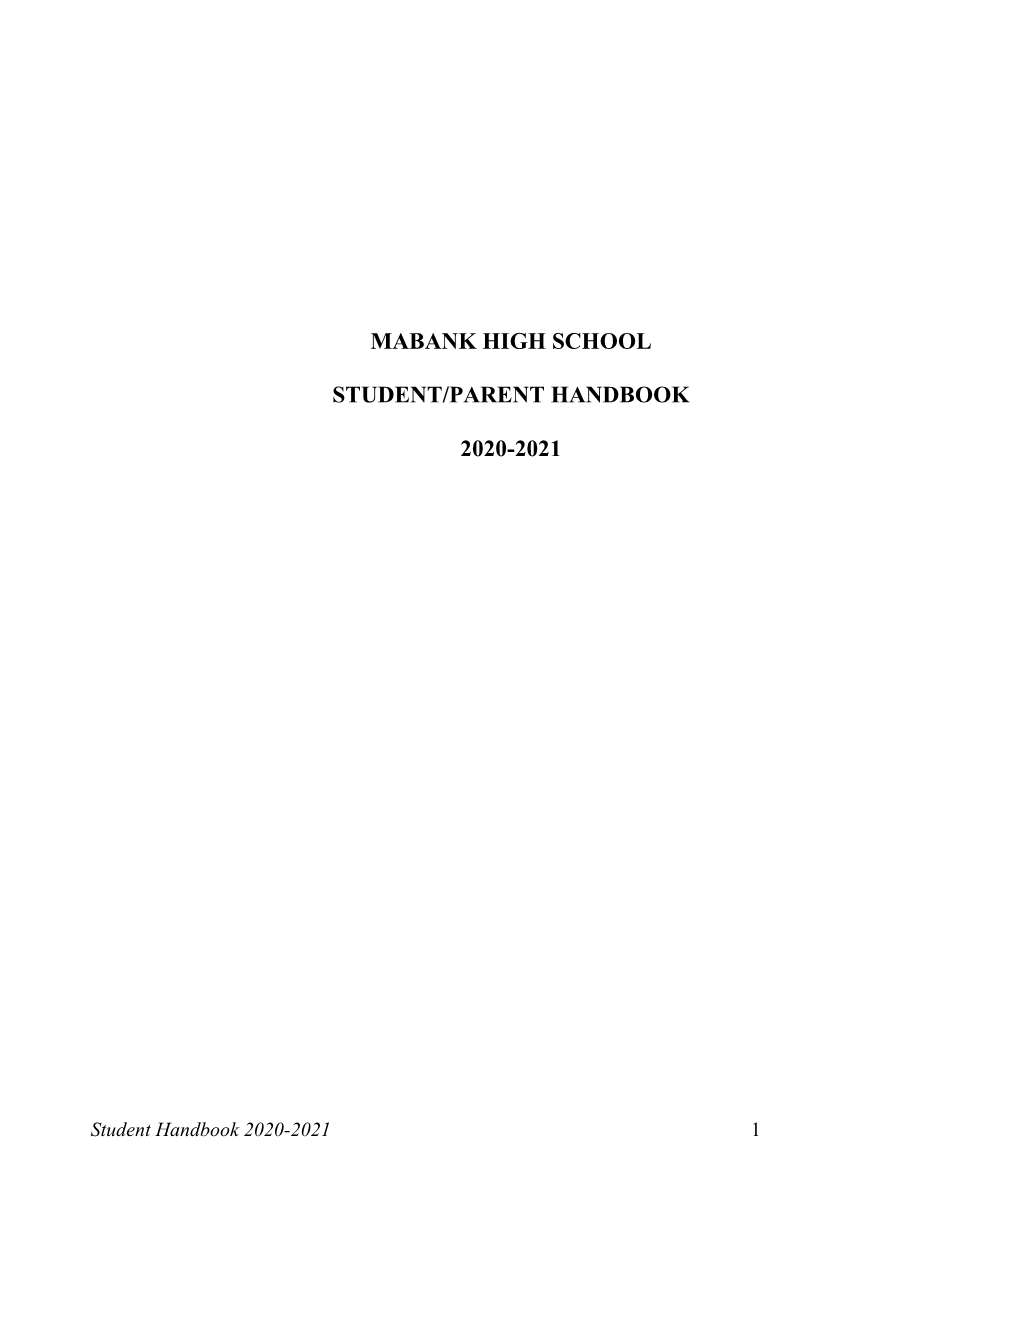 Mabank High School Student/Parent Handbook